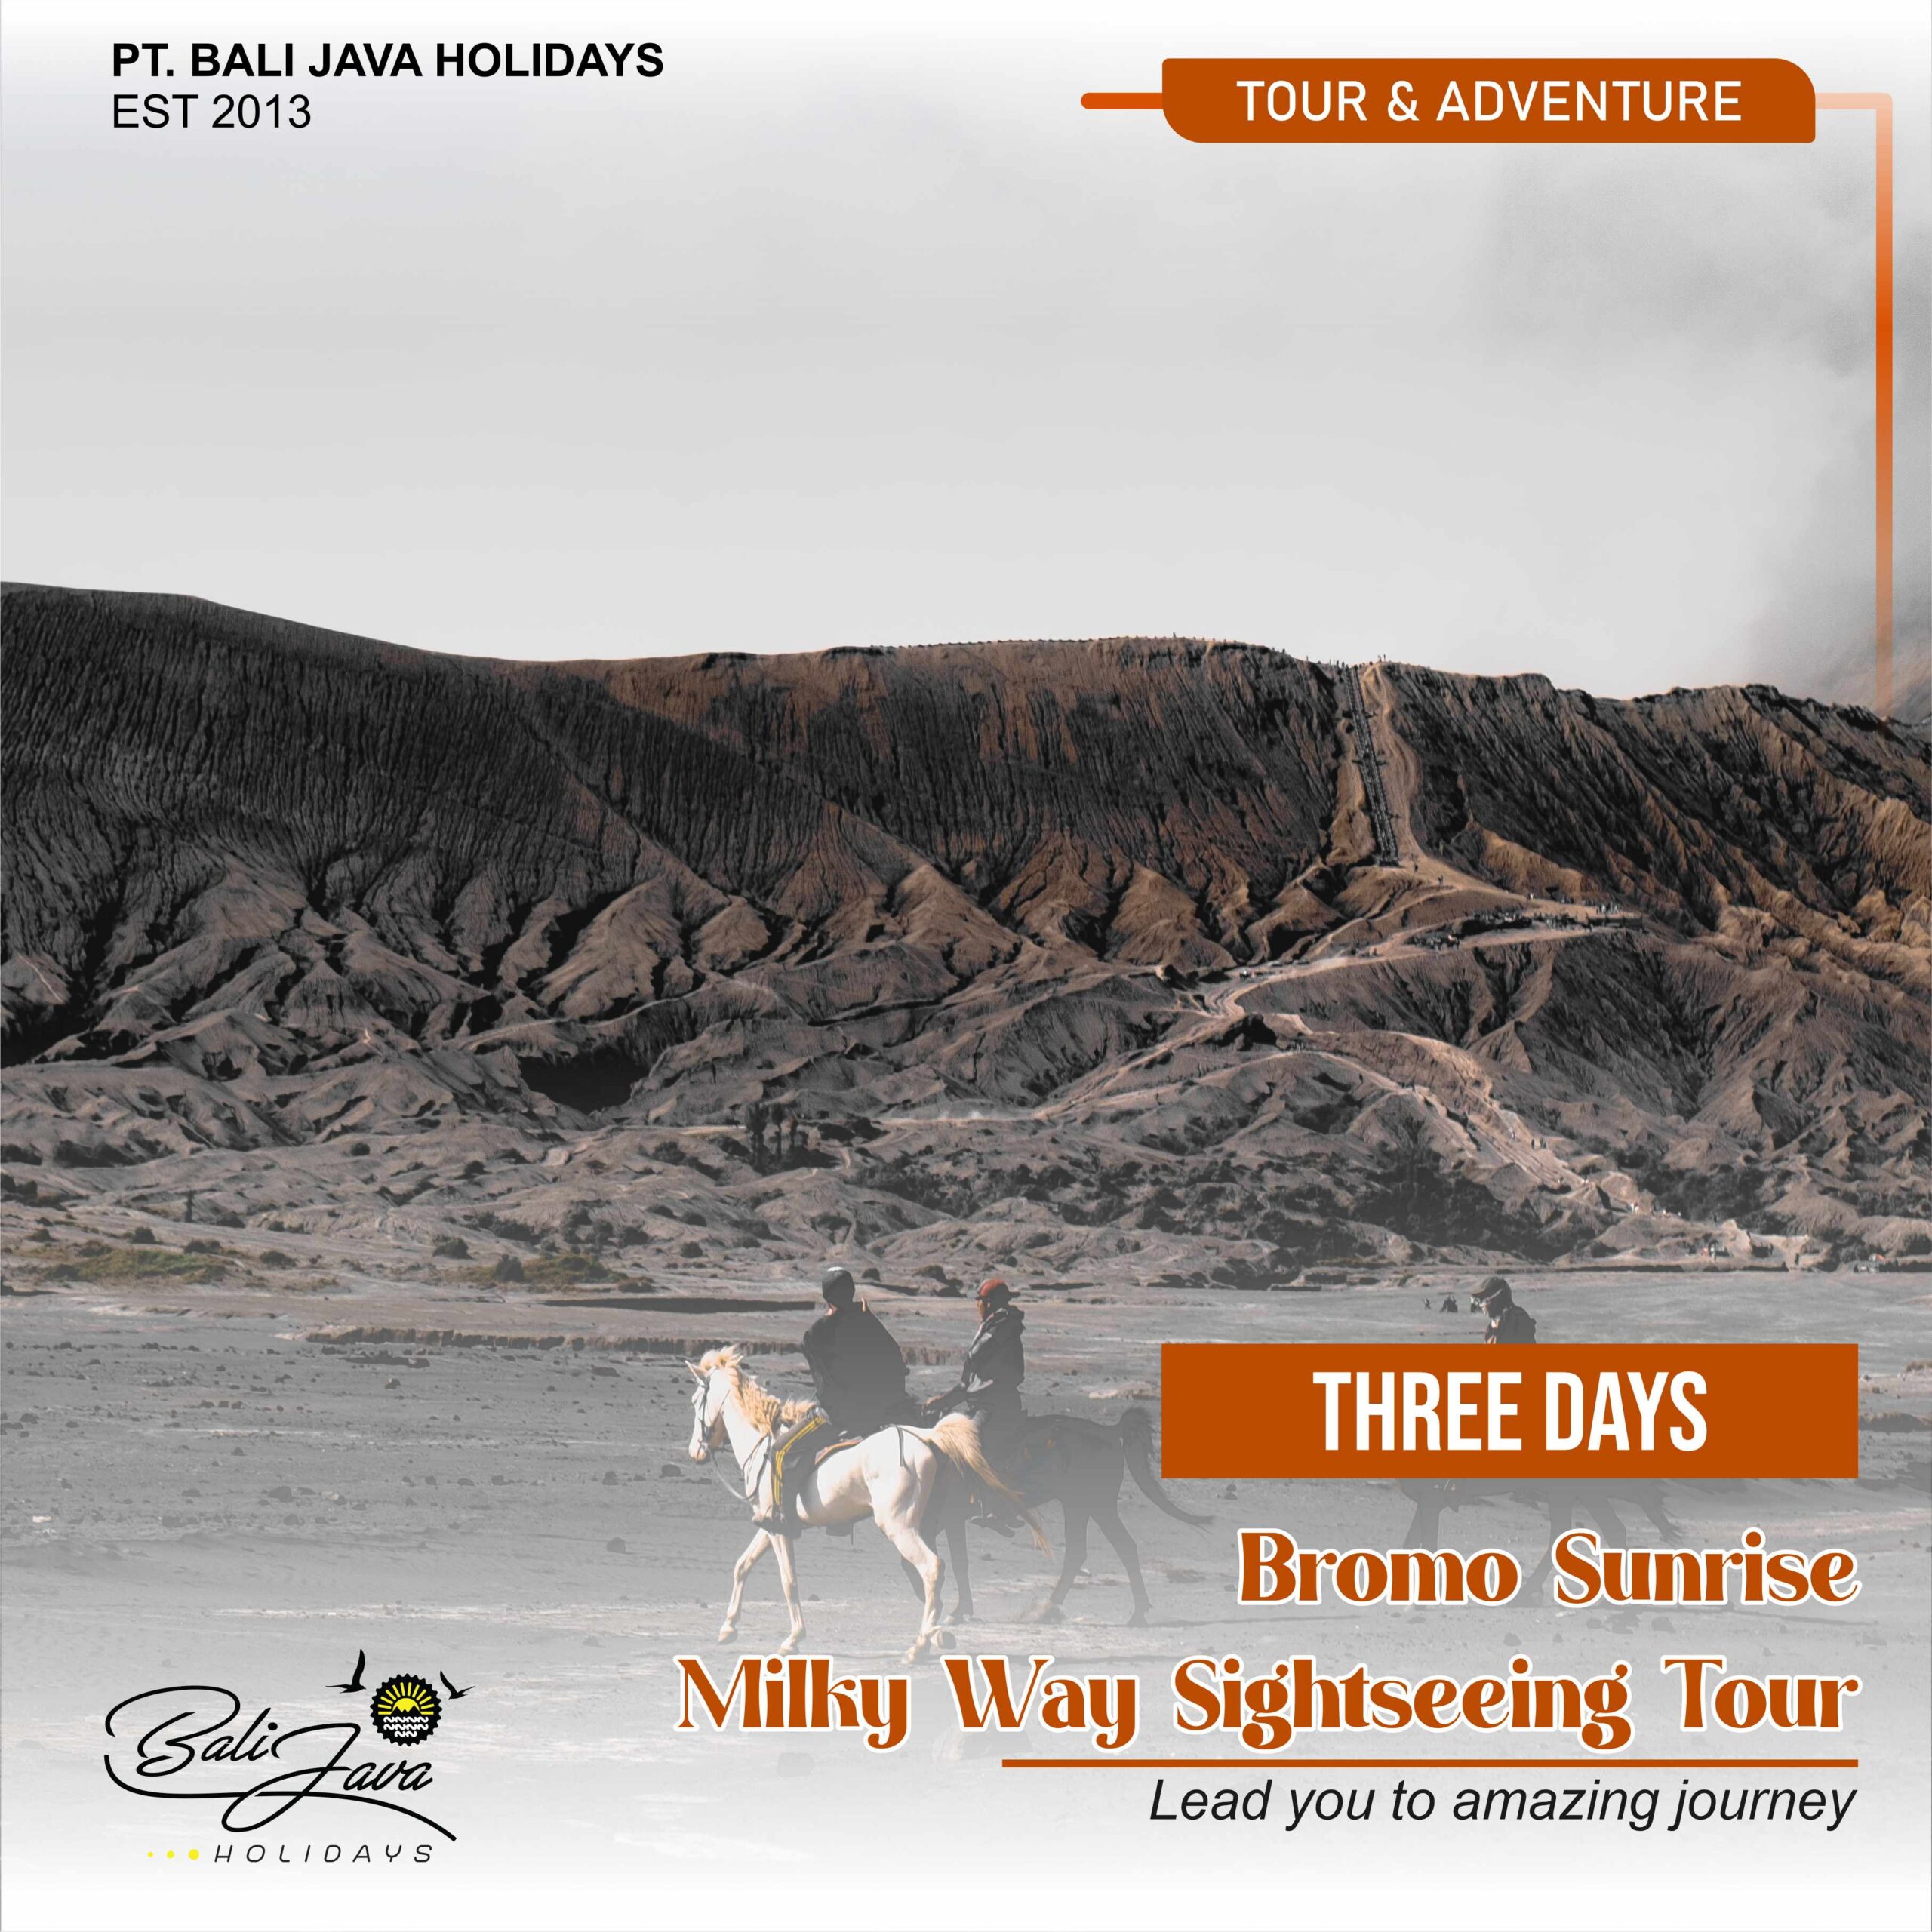 Mount Bromo Sunrise & Milky Way Sightseeing Tour 3 Days